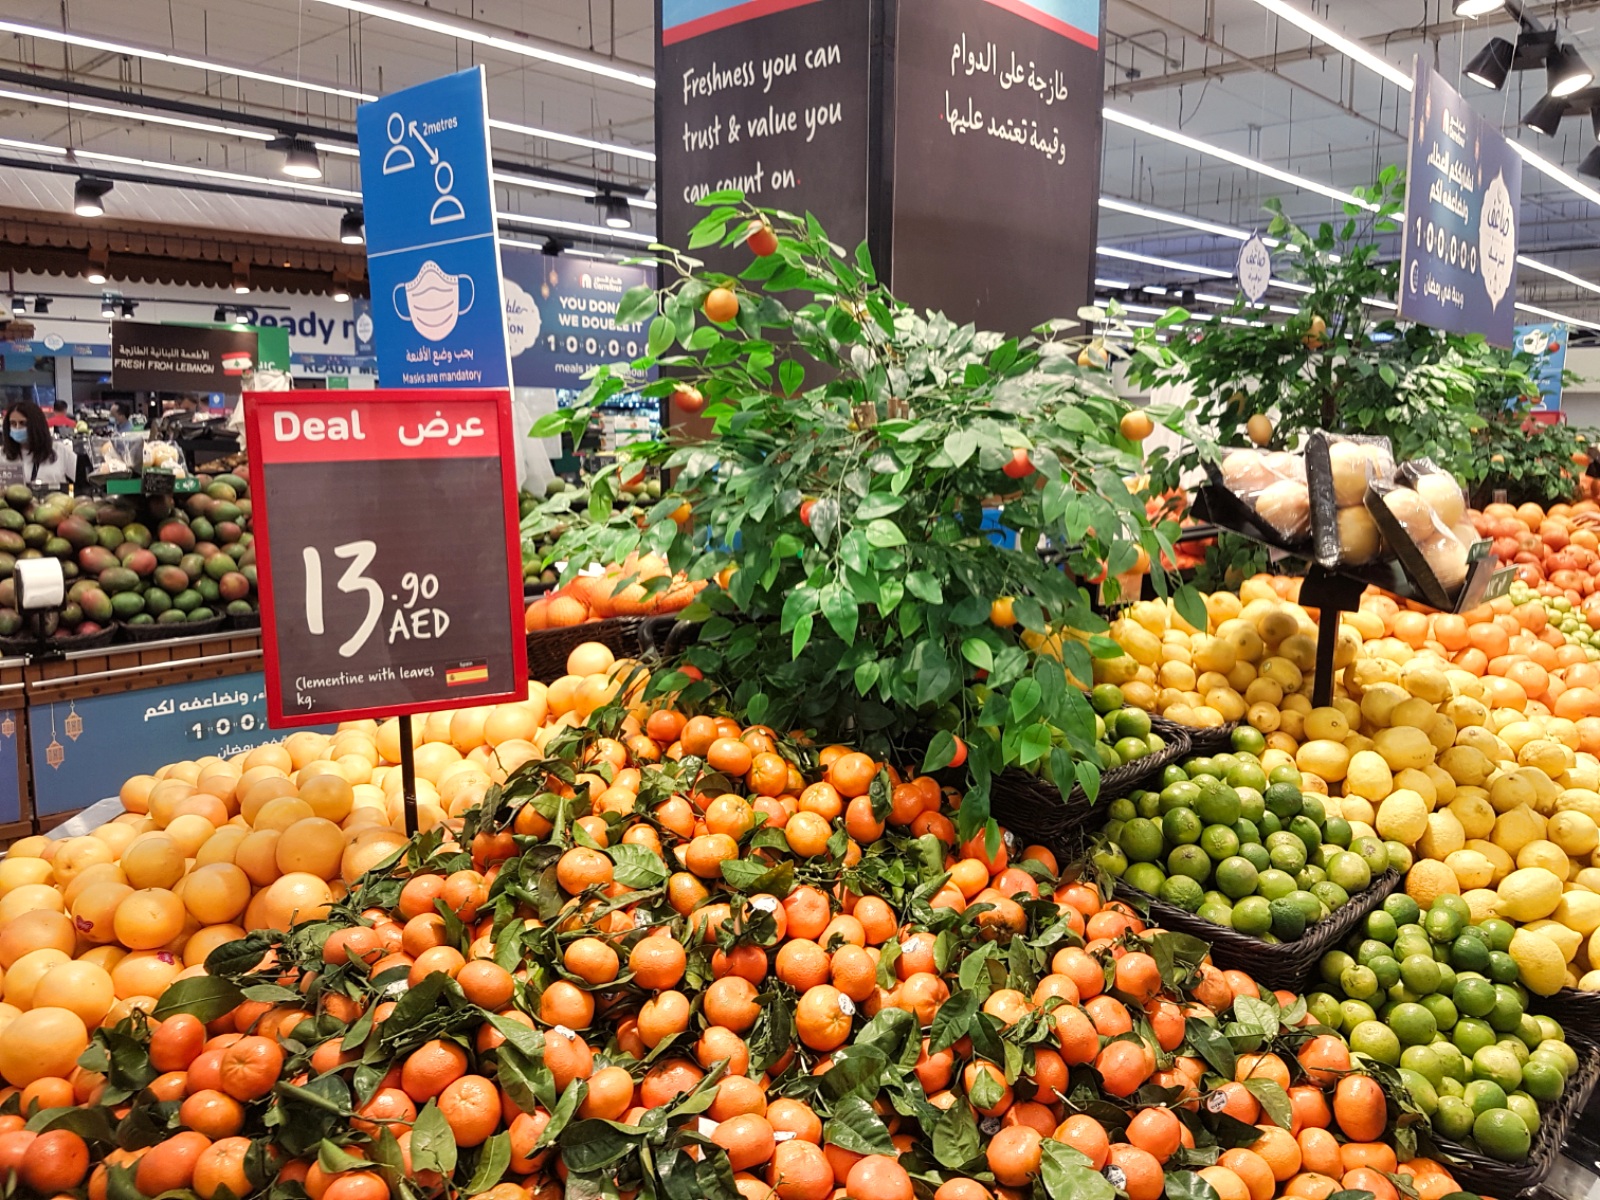 Supermarkets in Dubai - Deals and discounts